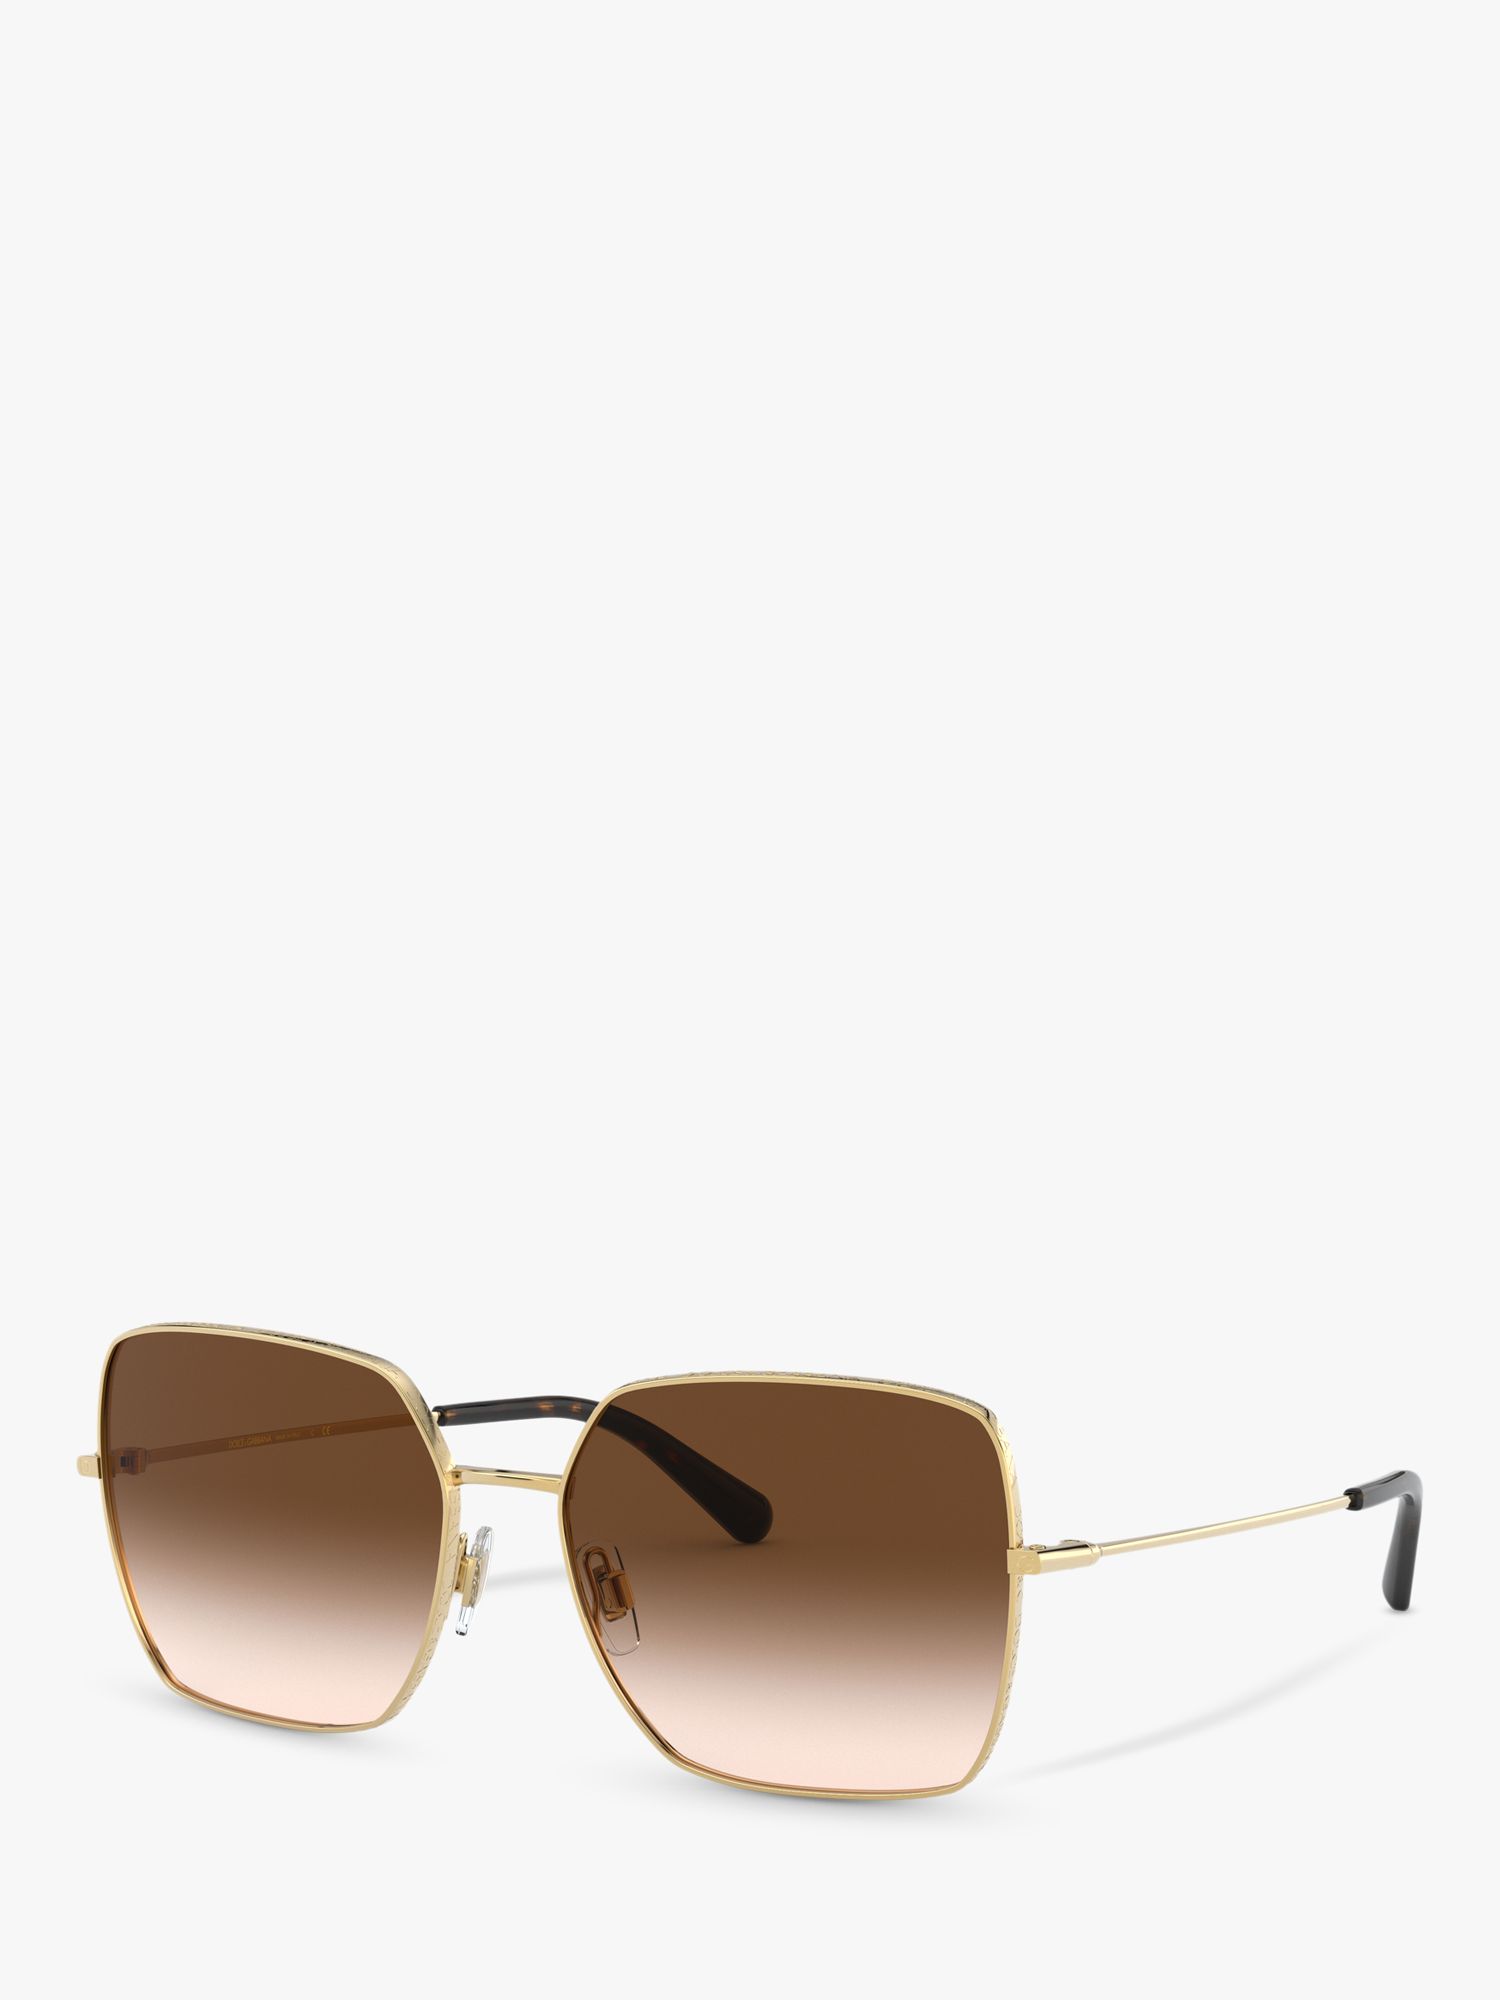 d&g gold sunglasses